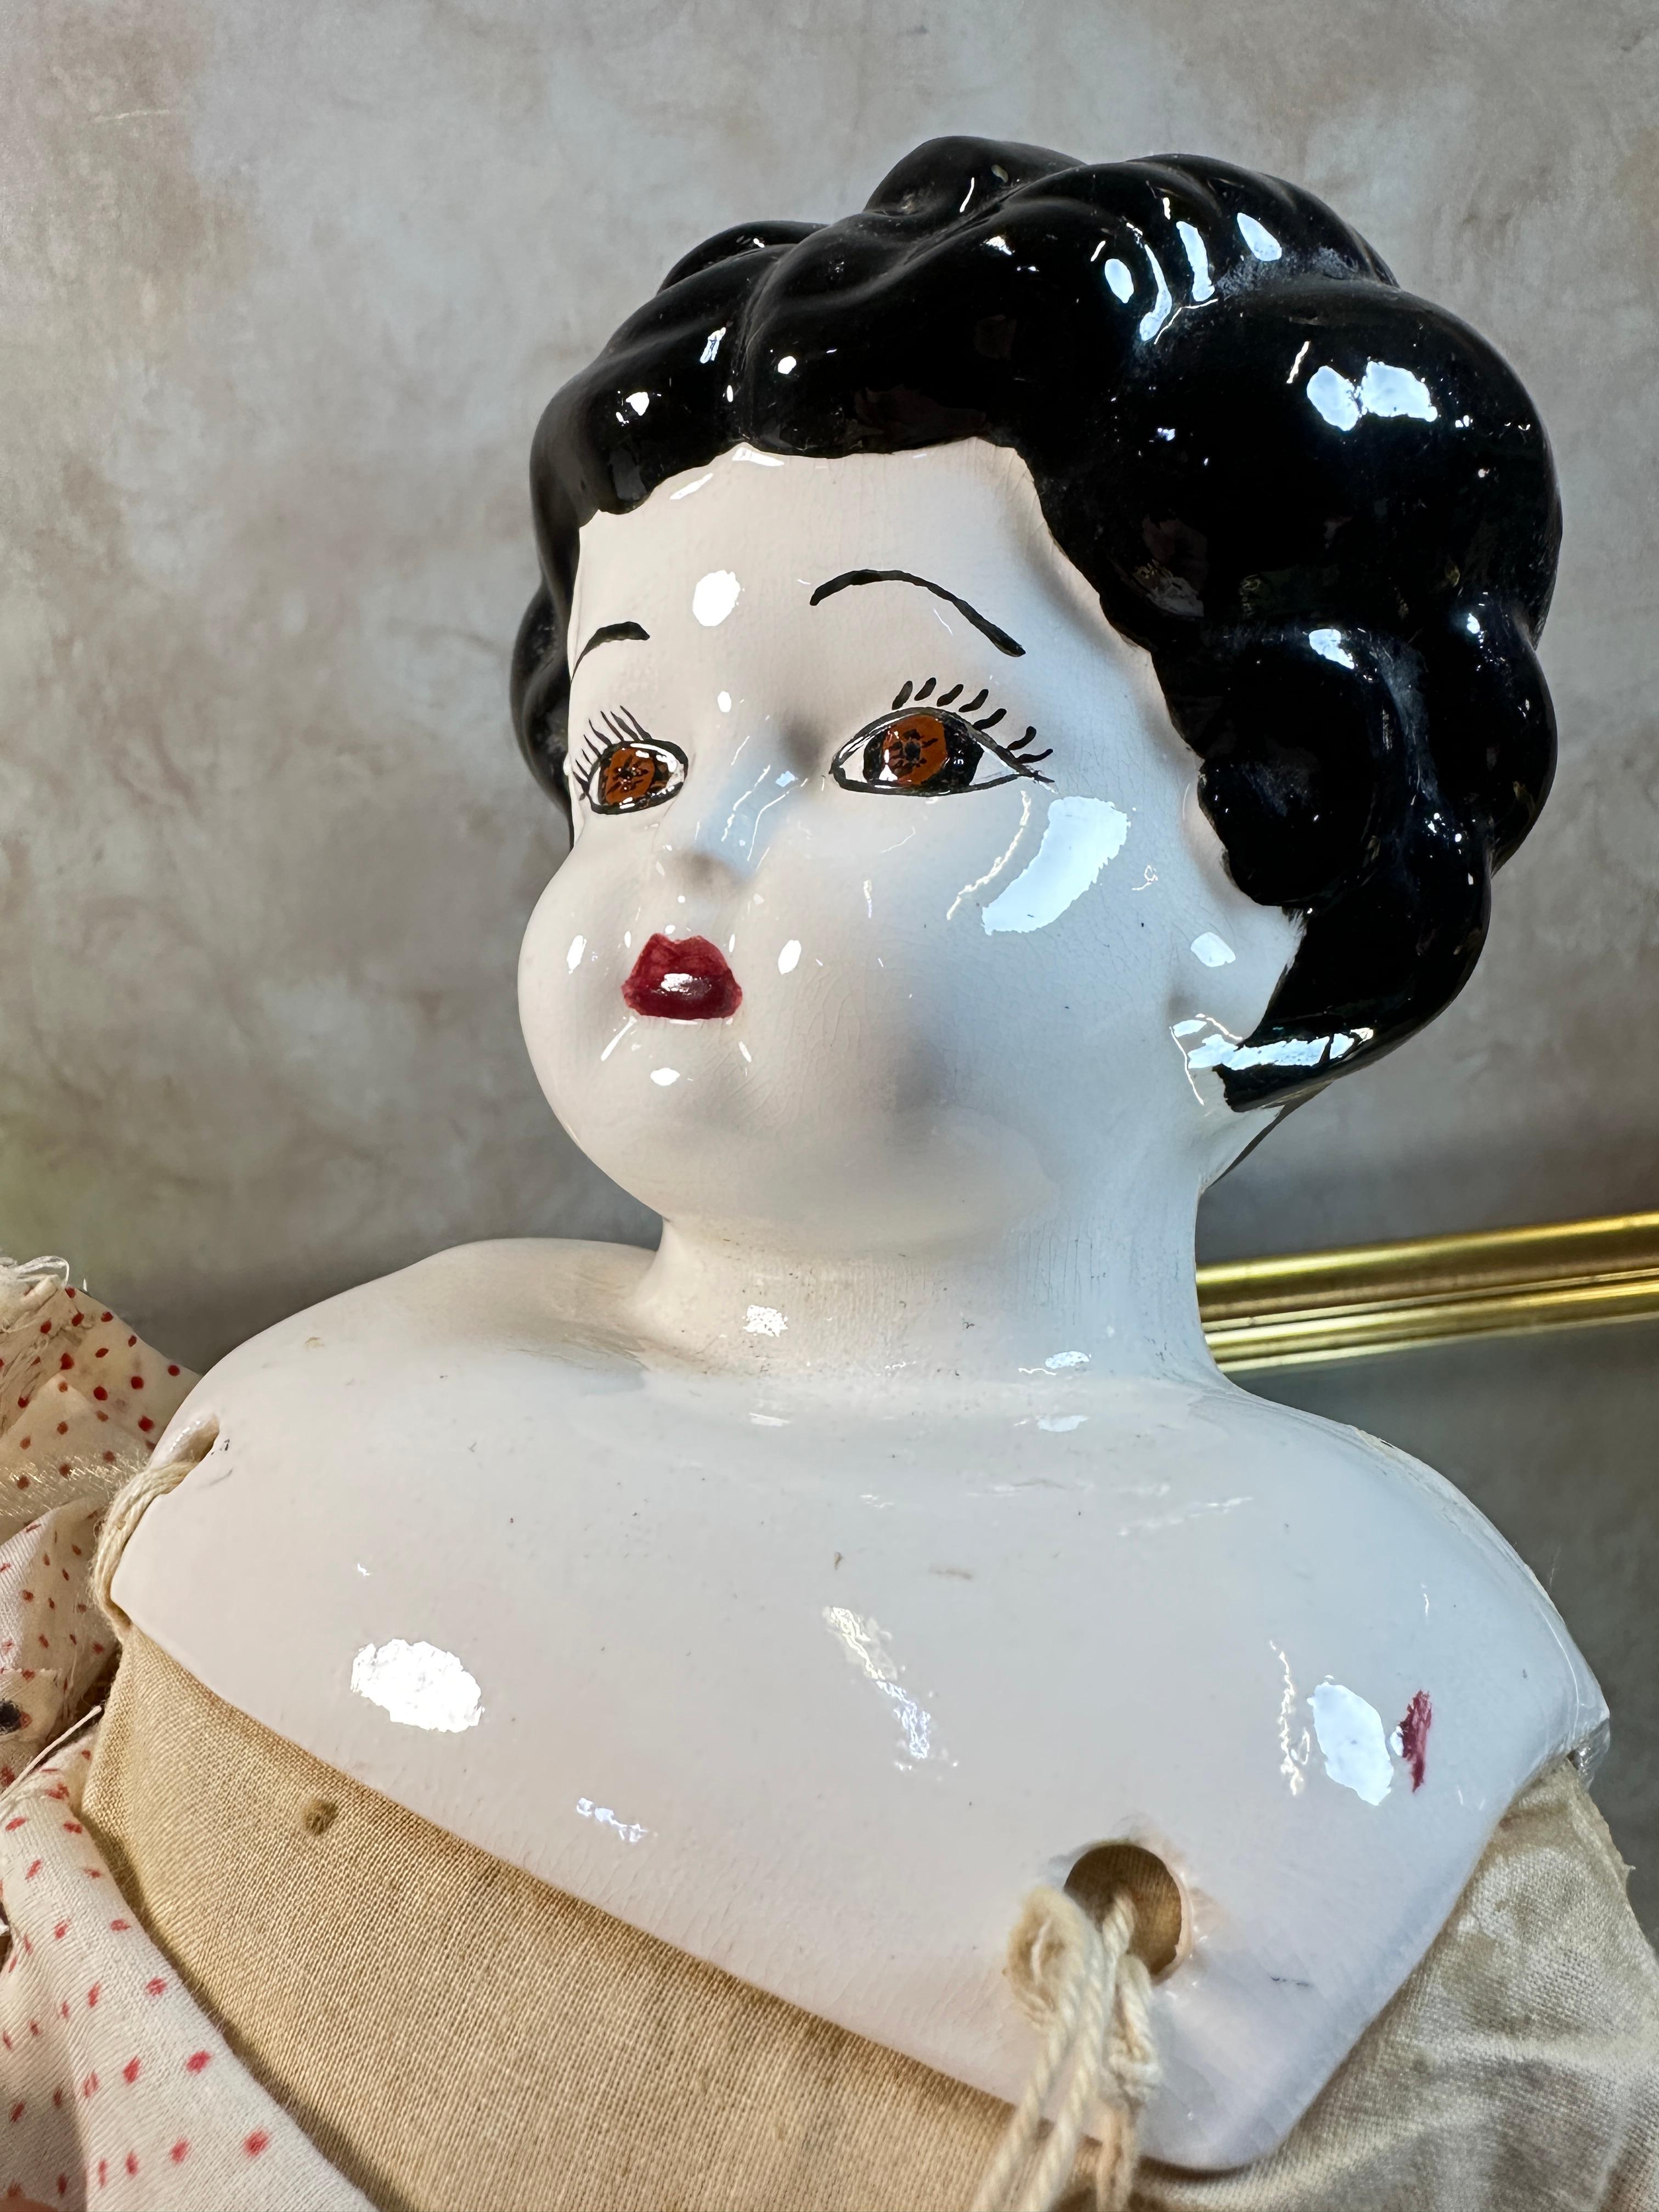 Antique China Head Doll